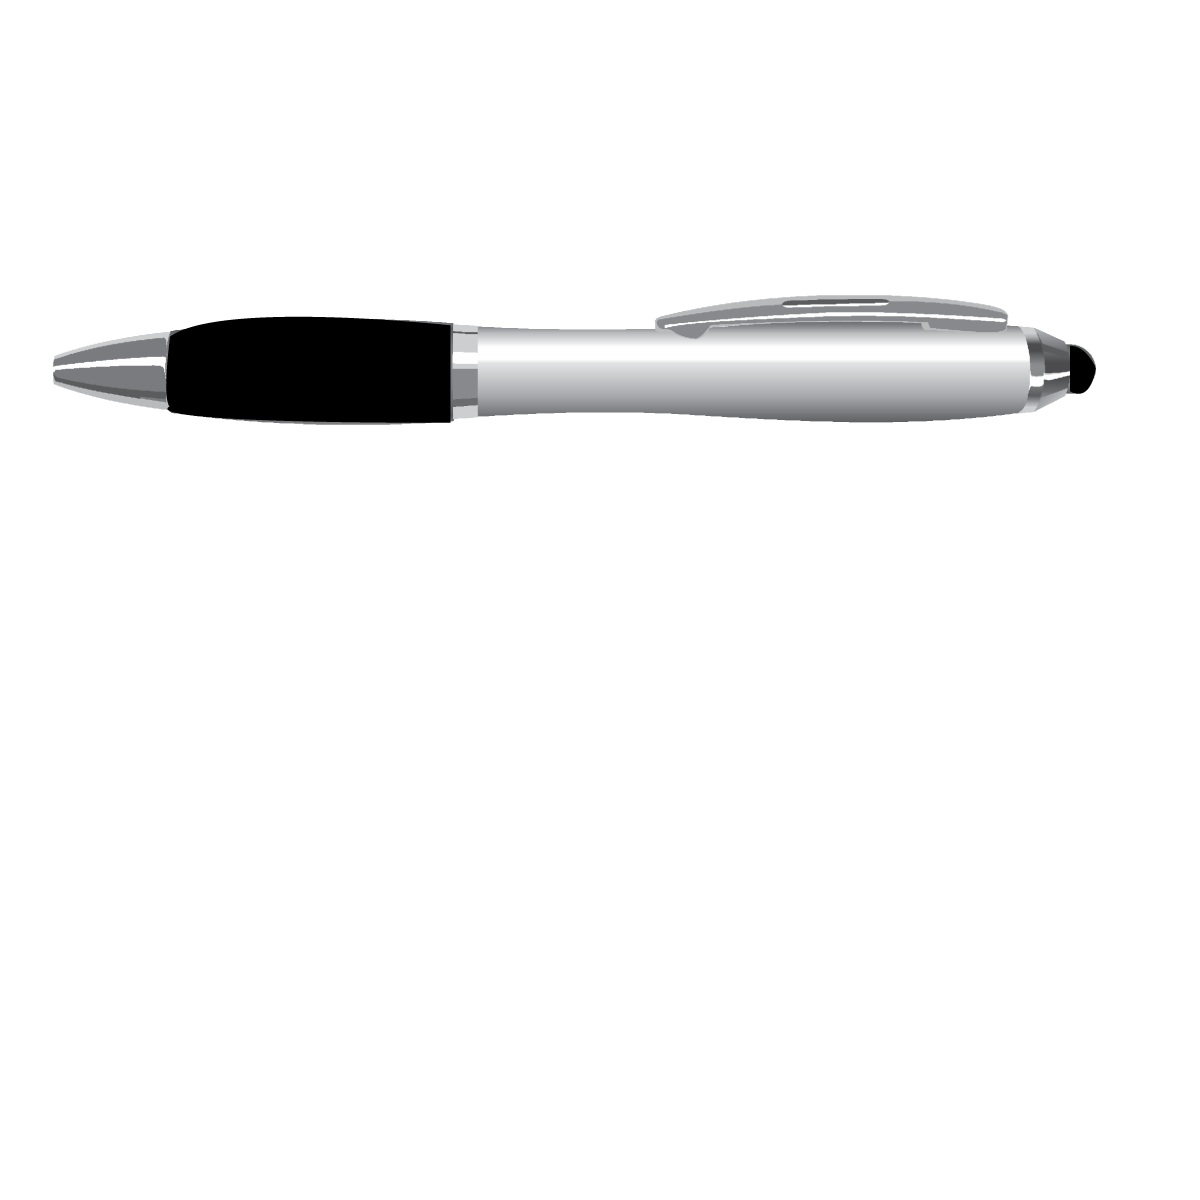 Translucent Black Silhouette Stylus Pen